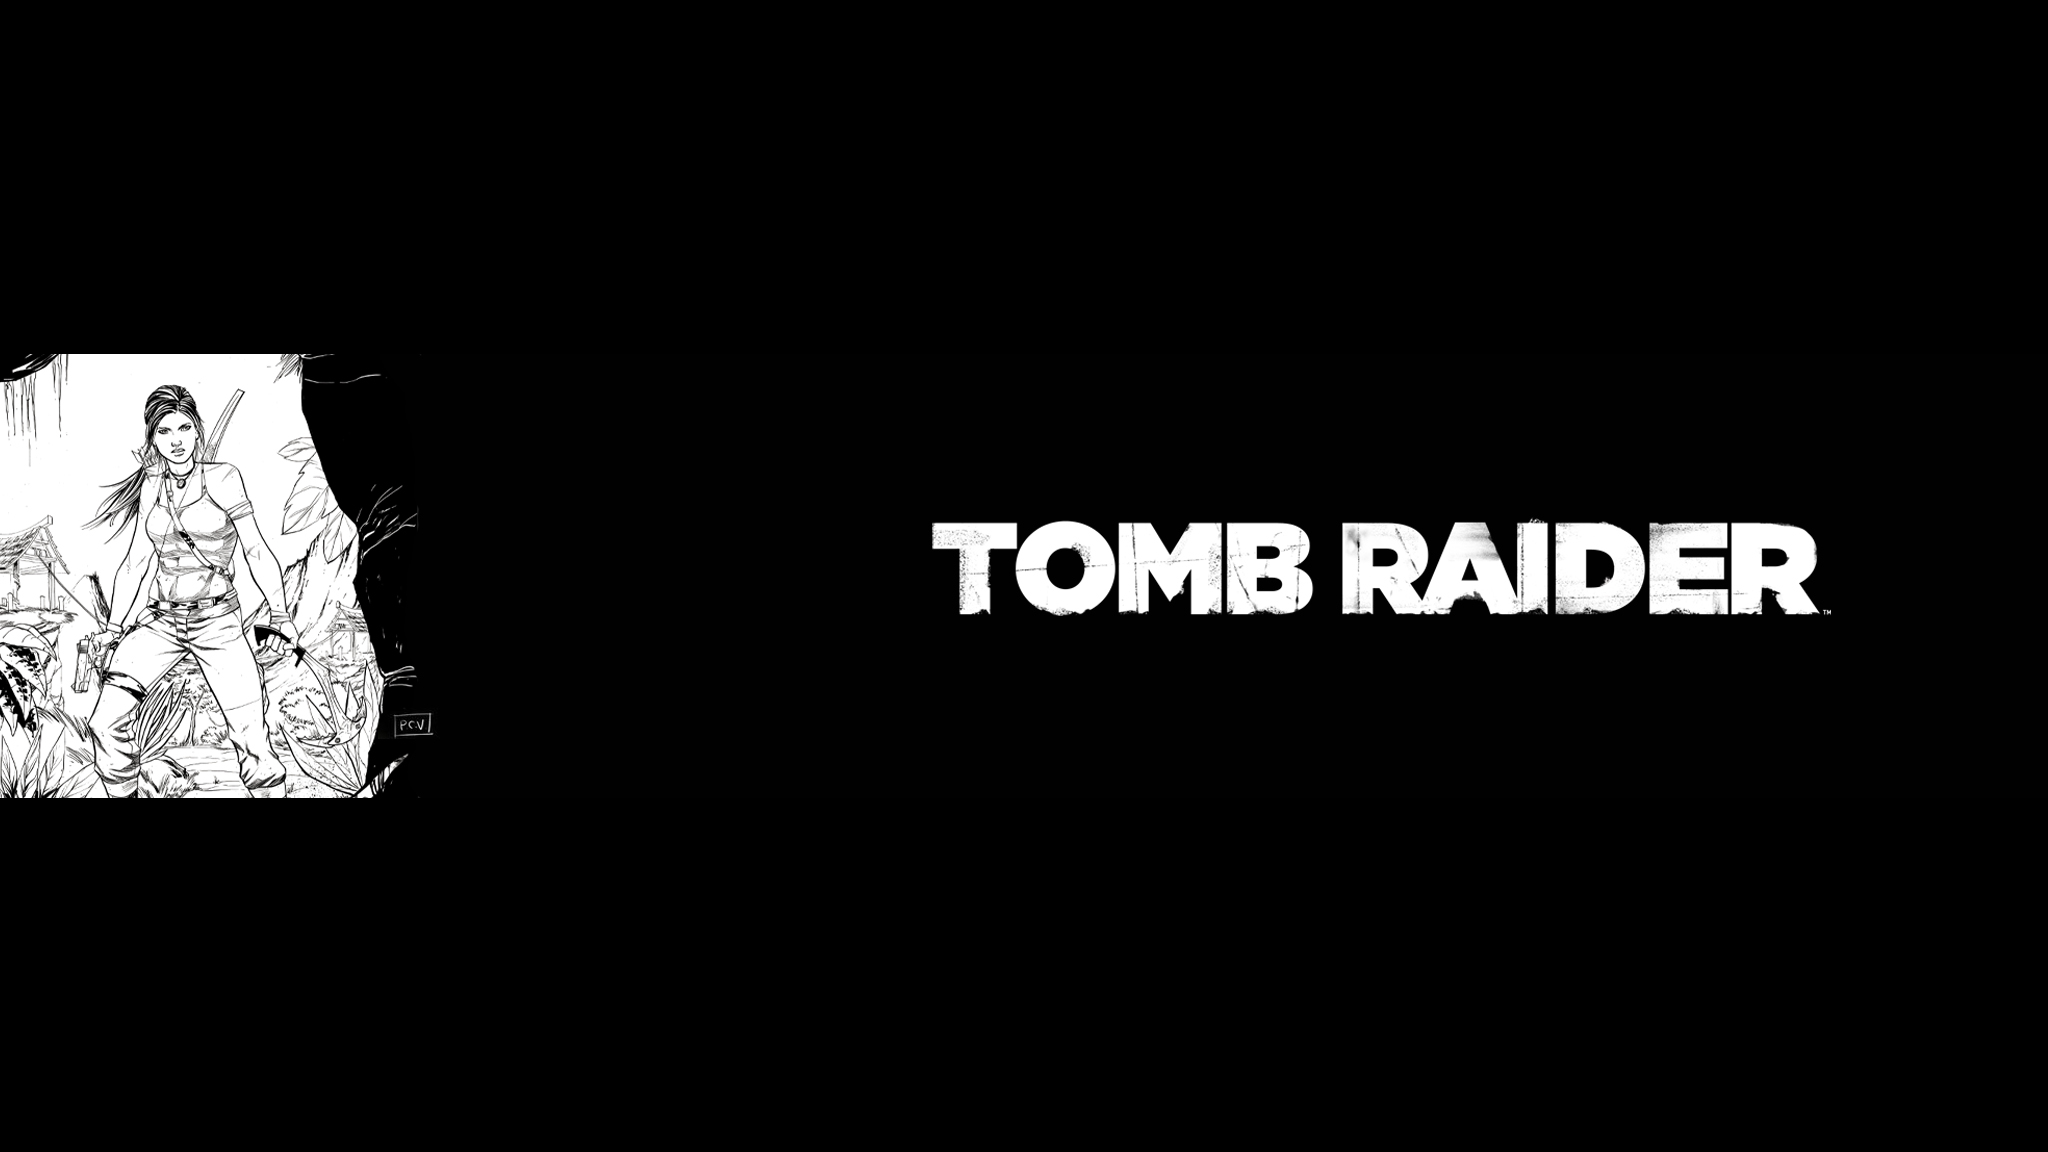 Tomb Raider Comics Phillip Sevy YouTube Banner.jpg